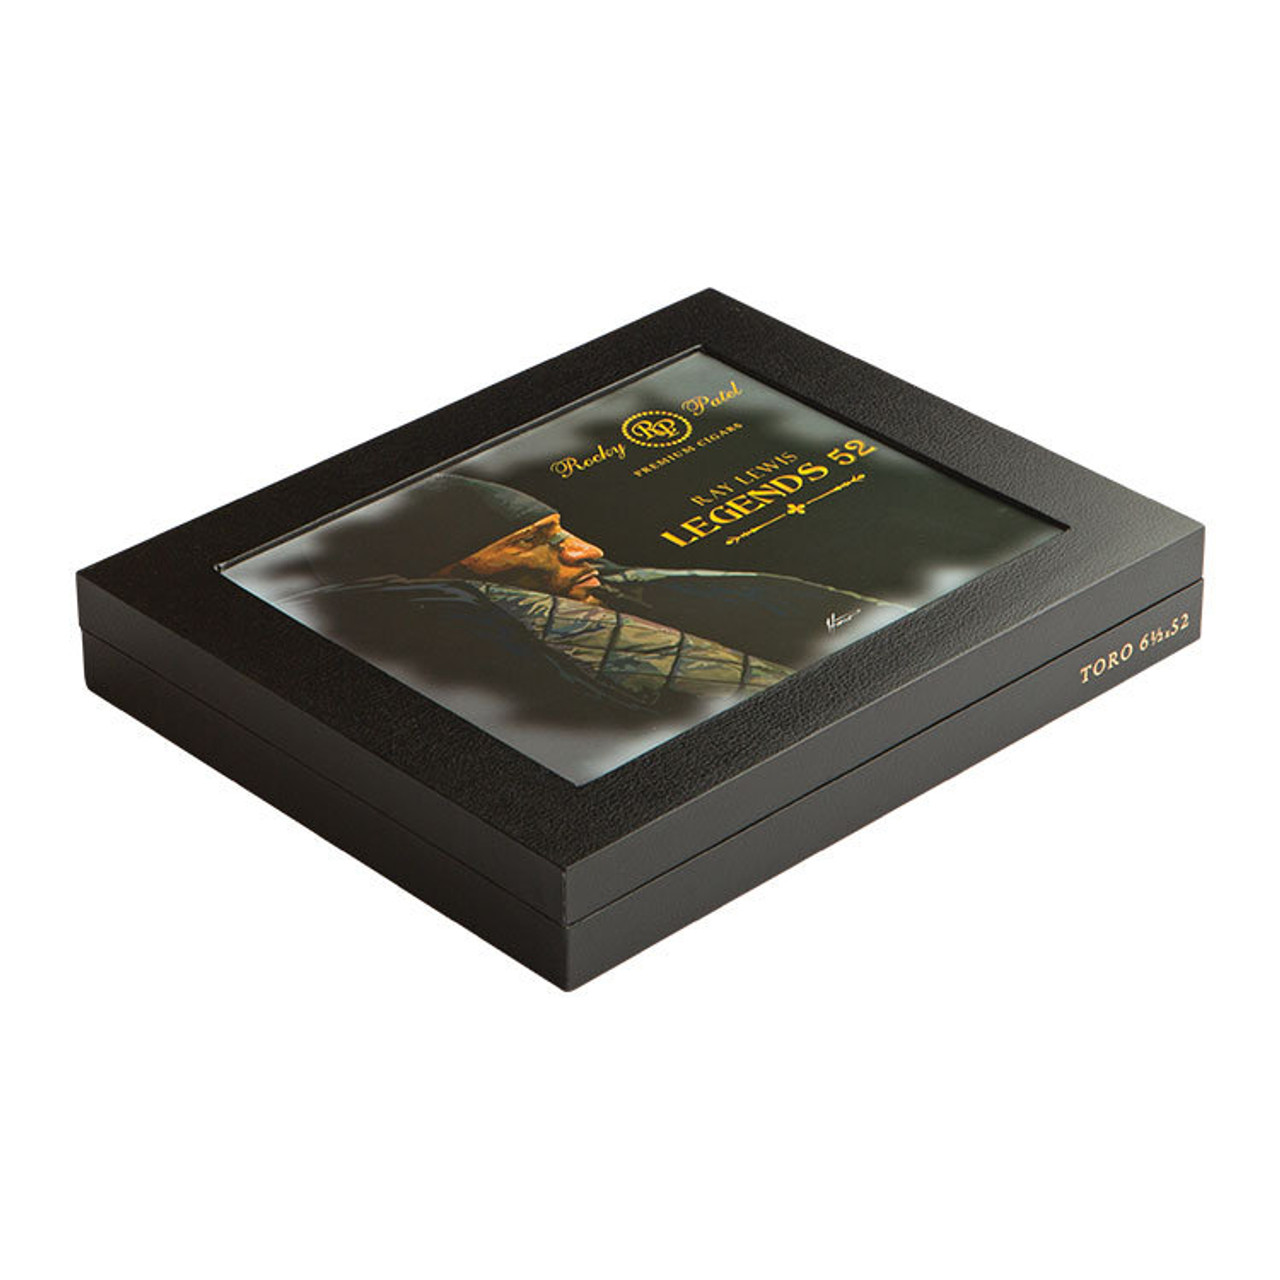 Rocky Patel Legends 52 Ray Lewis Toro Cigars - 6.5 x 52 (Box of 10) *Box